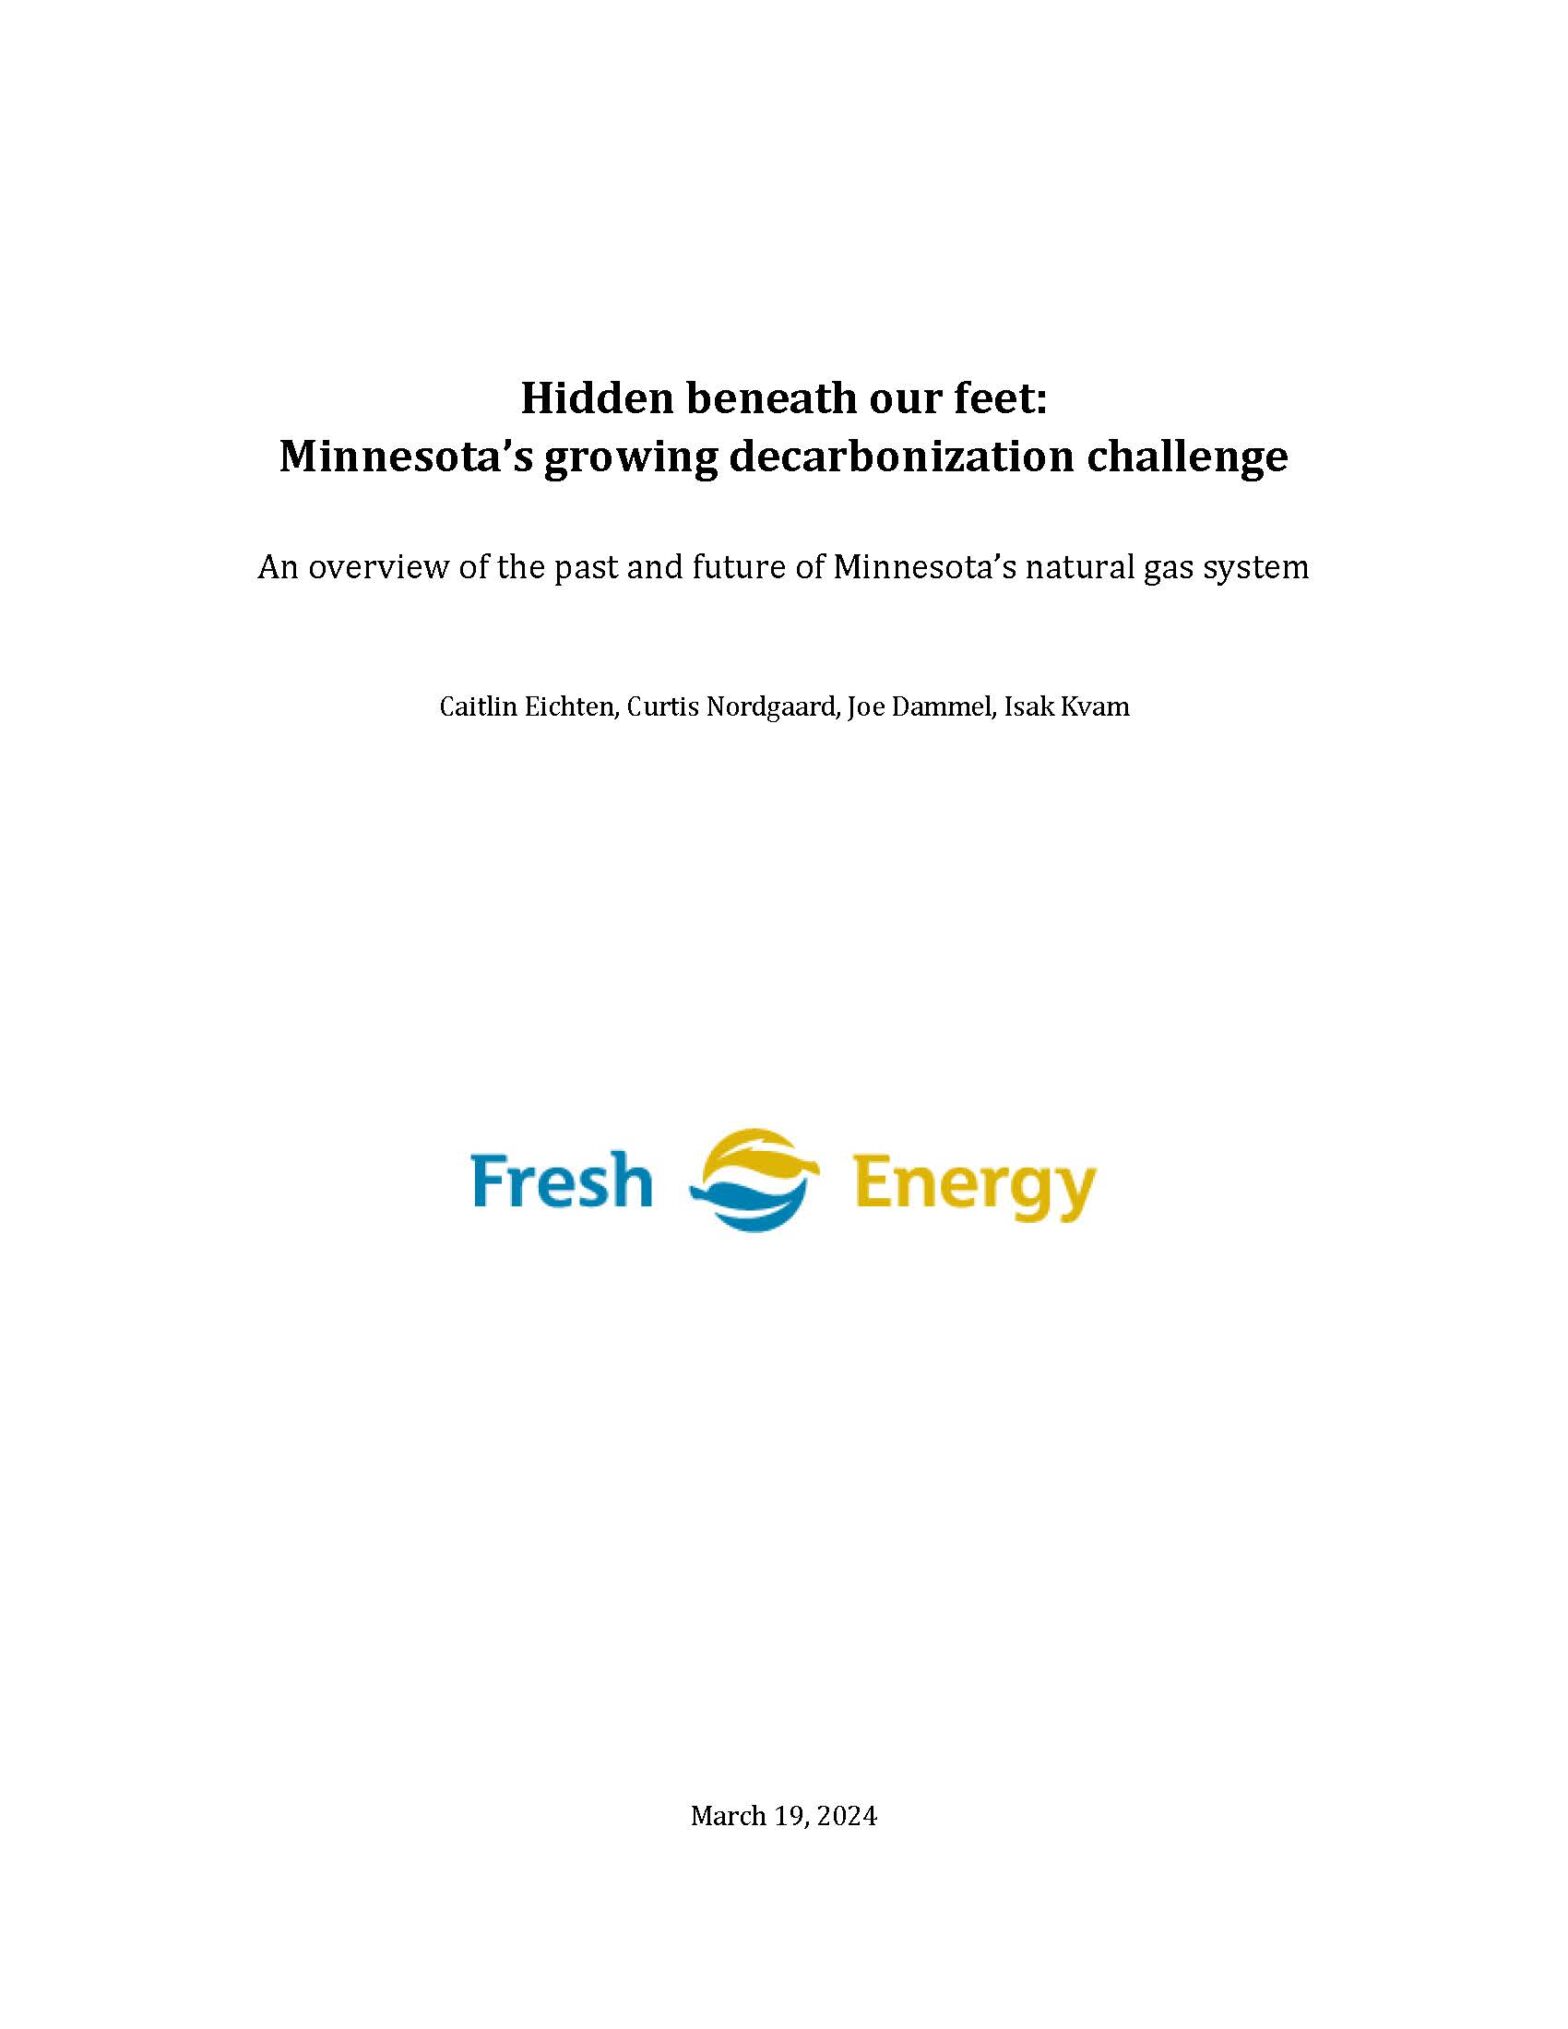 Text: Hidden beneath our feet: Minnesota’s growing decarbonization challenge An overview of the past and future of Minnesota’s natural gas system Caitlin Eichten, Curtis Nordgaard, Joe Dammel, Isak Kvam. Fresh Energy logo.